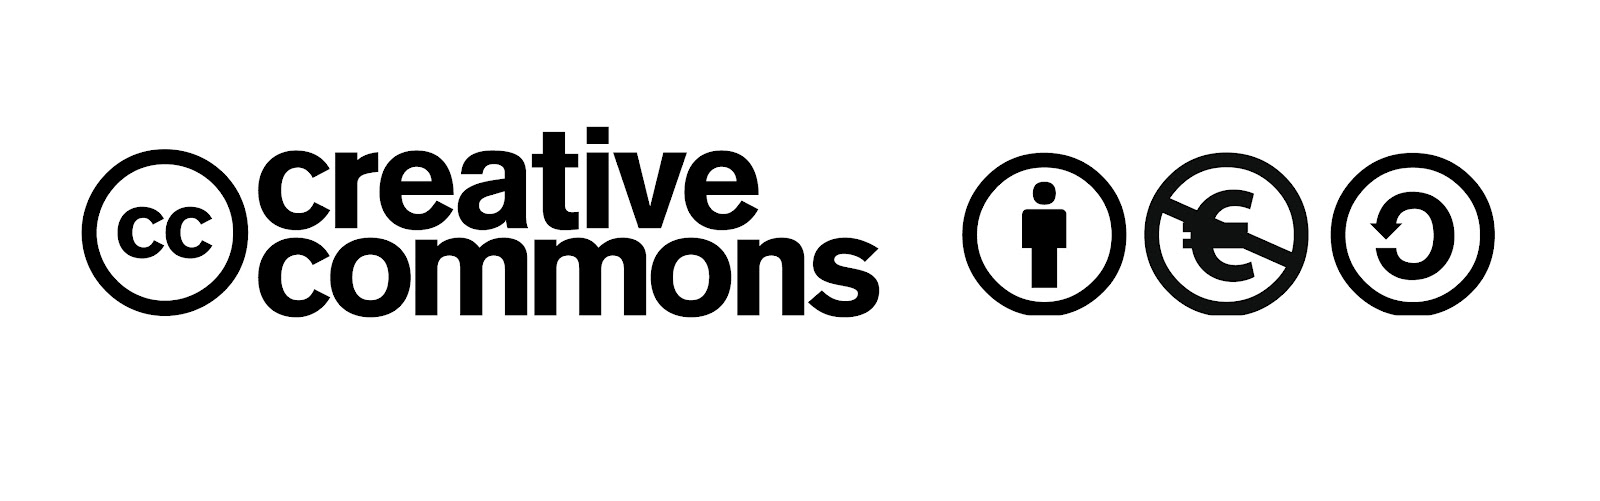 Creative commons 4.0. Креатив комментс это. КК креатив Коммонс. Тюмень Creative Commons. Подкаст Лаб зас.